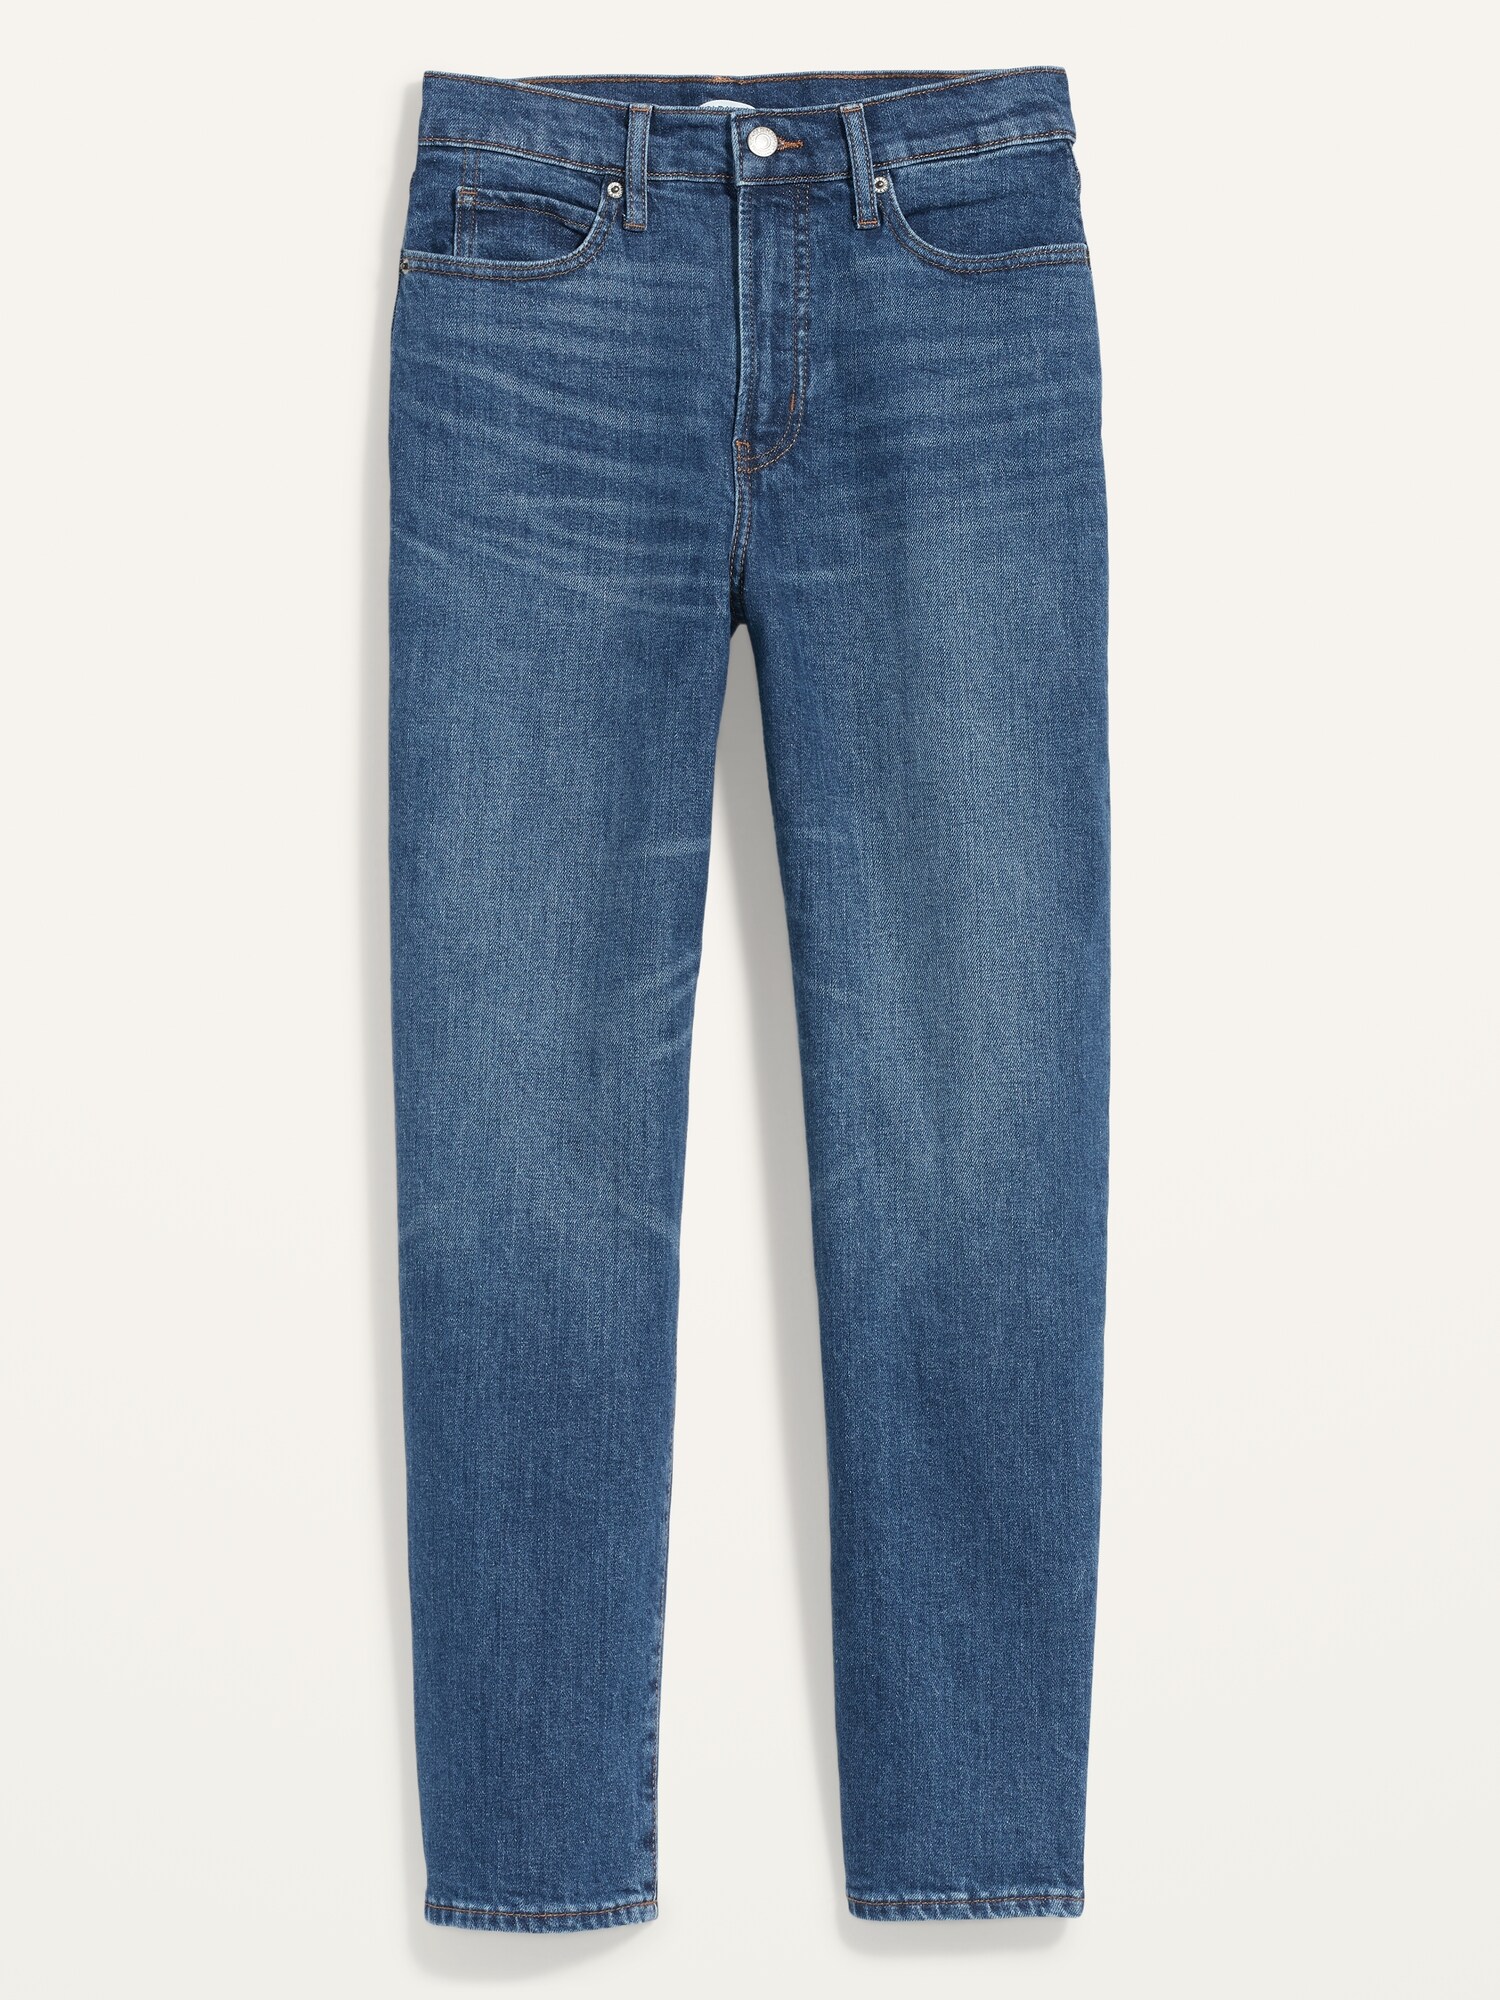 levi's 535 super skinny women's jeans